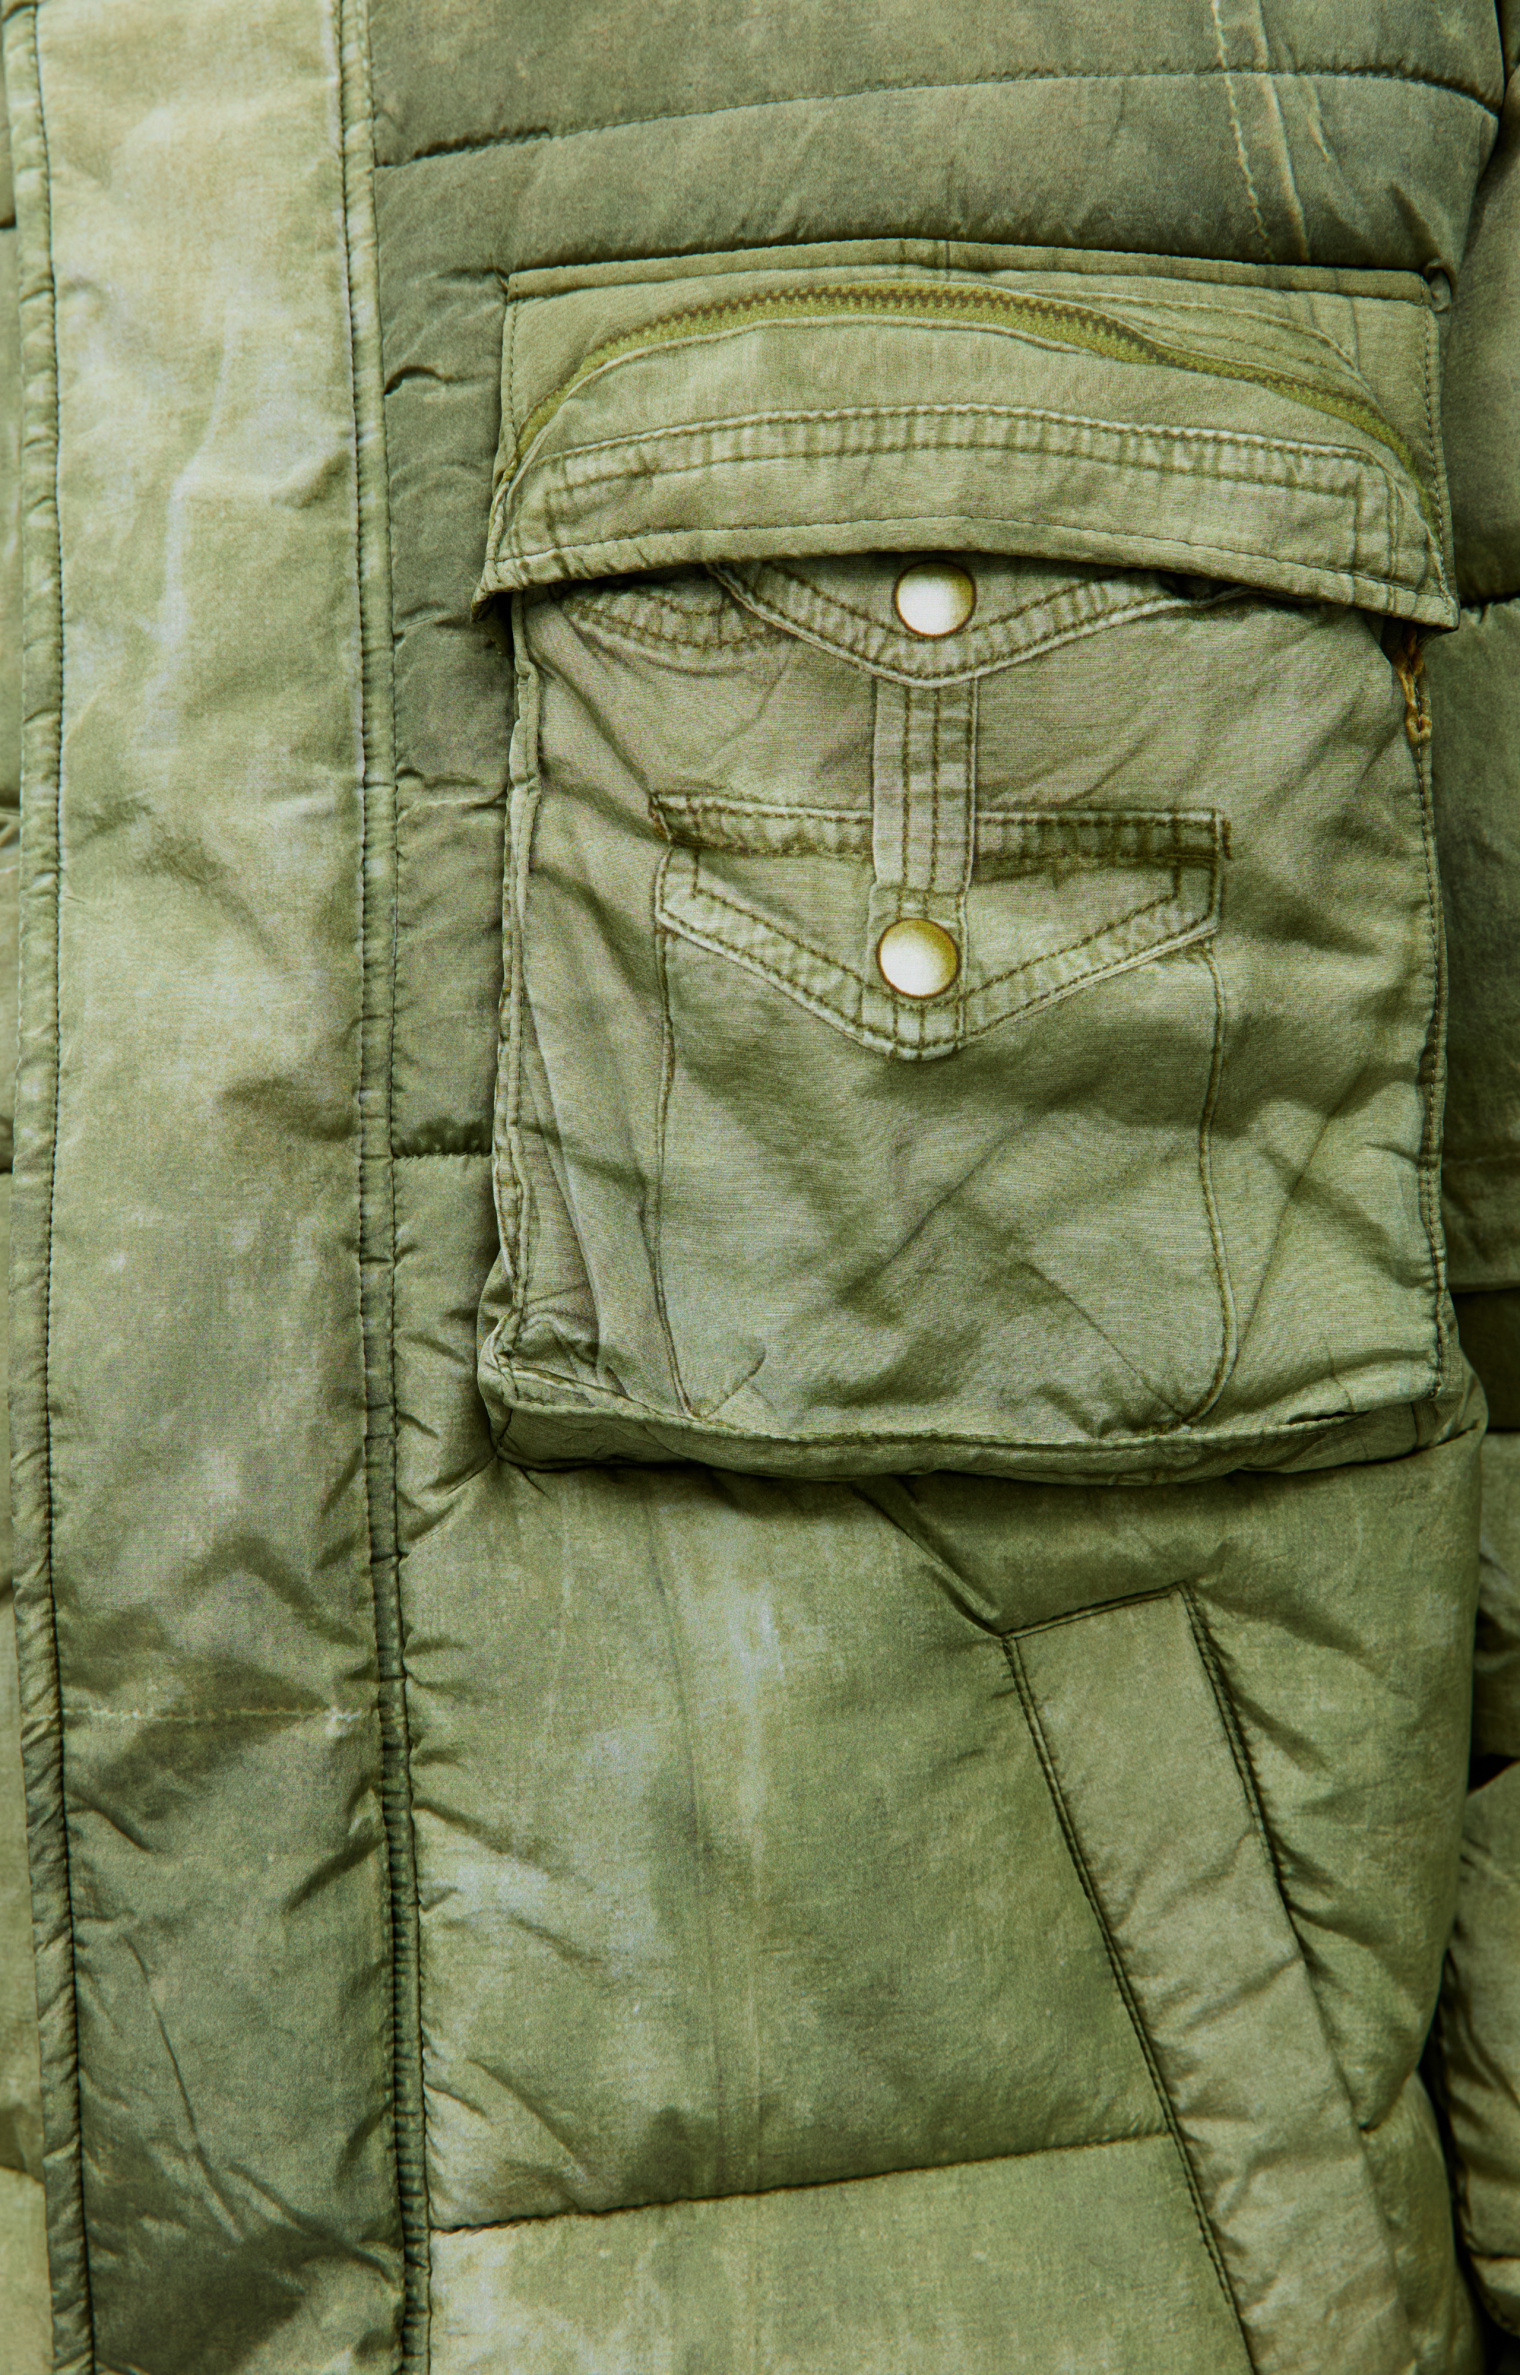 Diesel W-Rolffus padded jacket